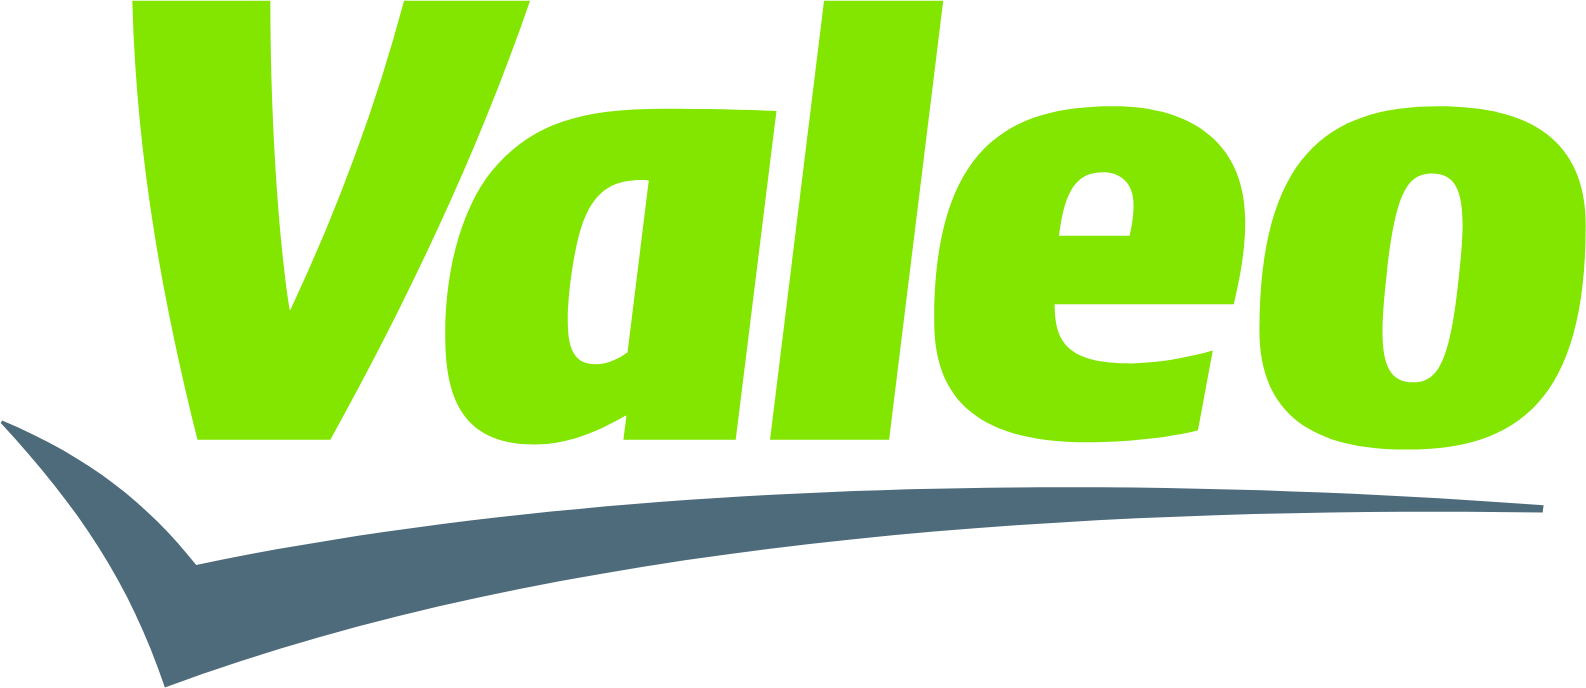 Valeo It companies in Bulgaria